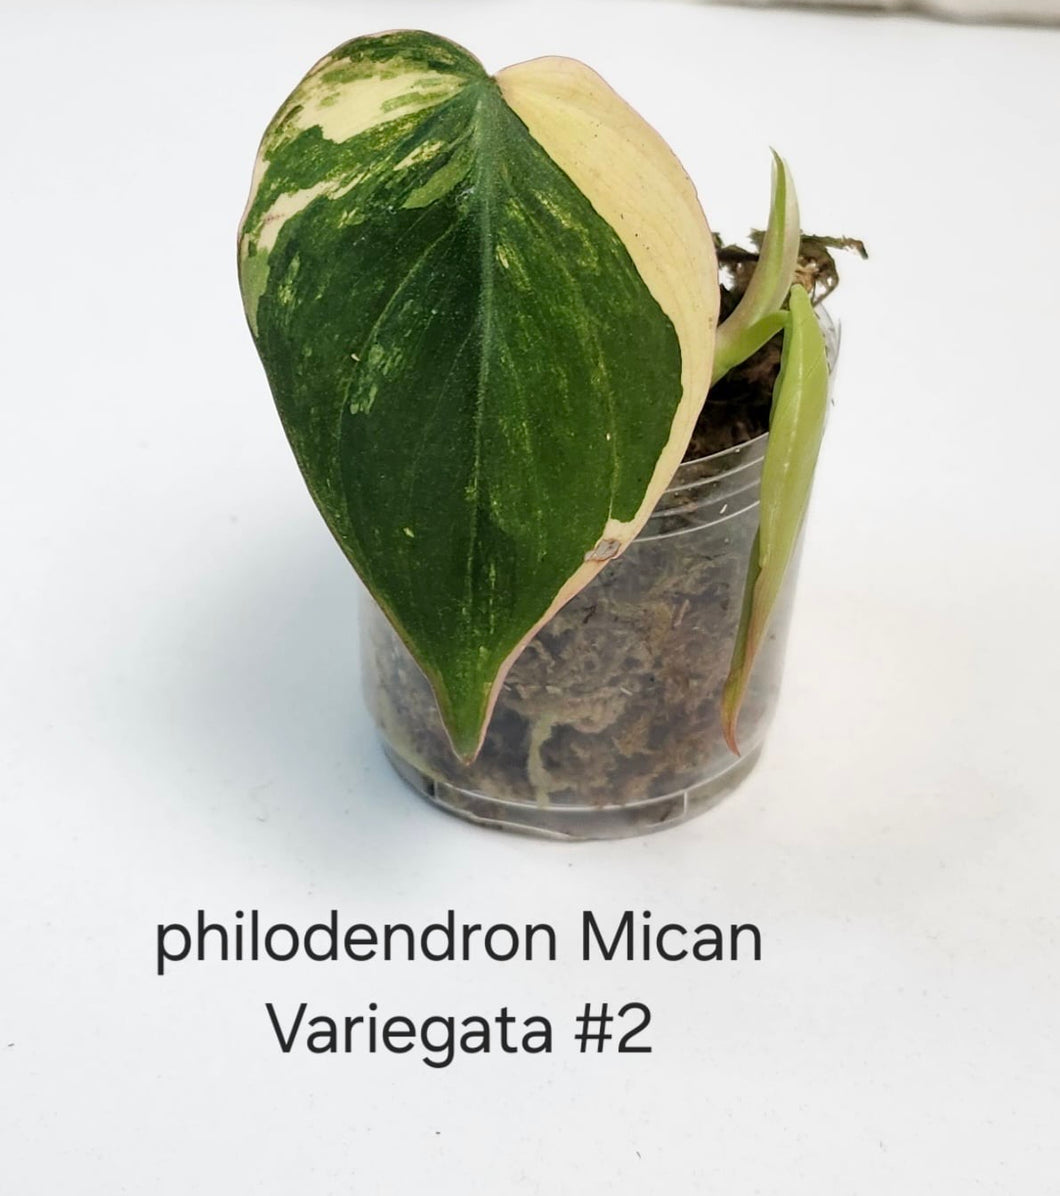 Philodendron Mican varigata #2